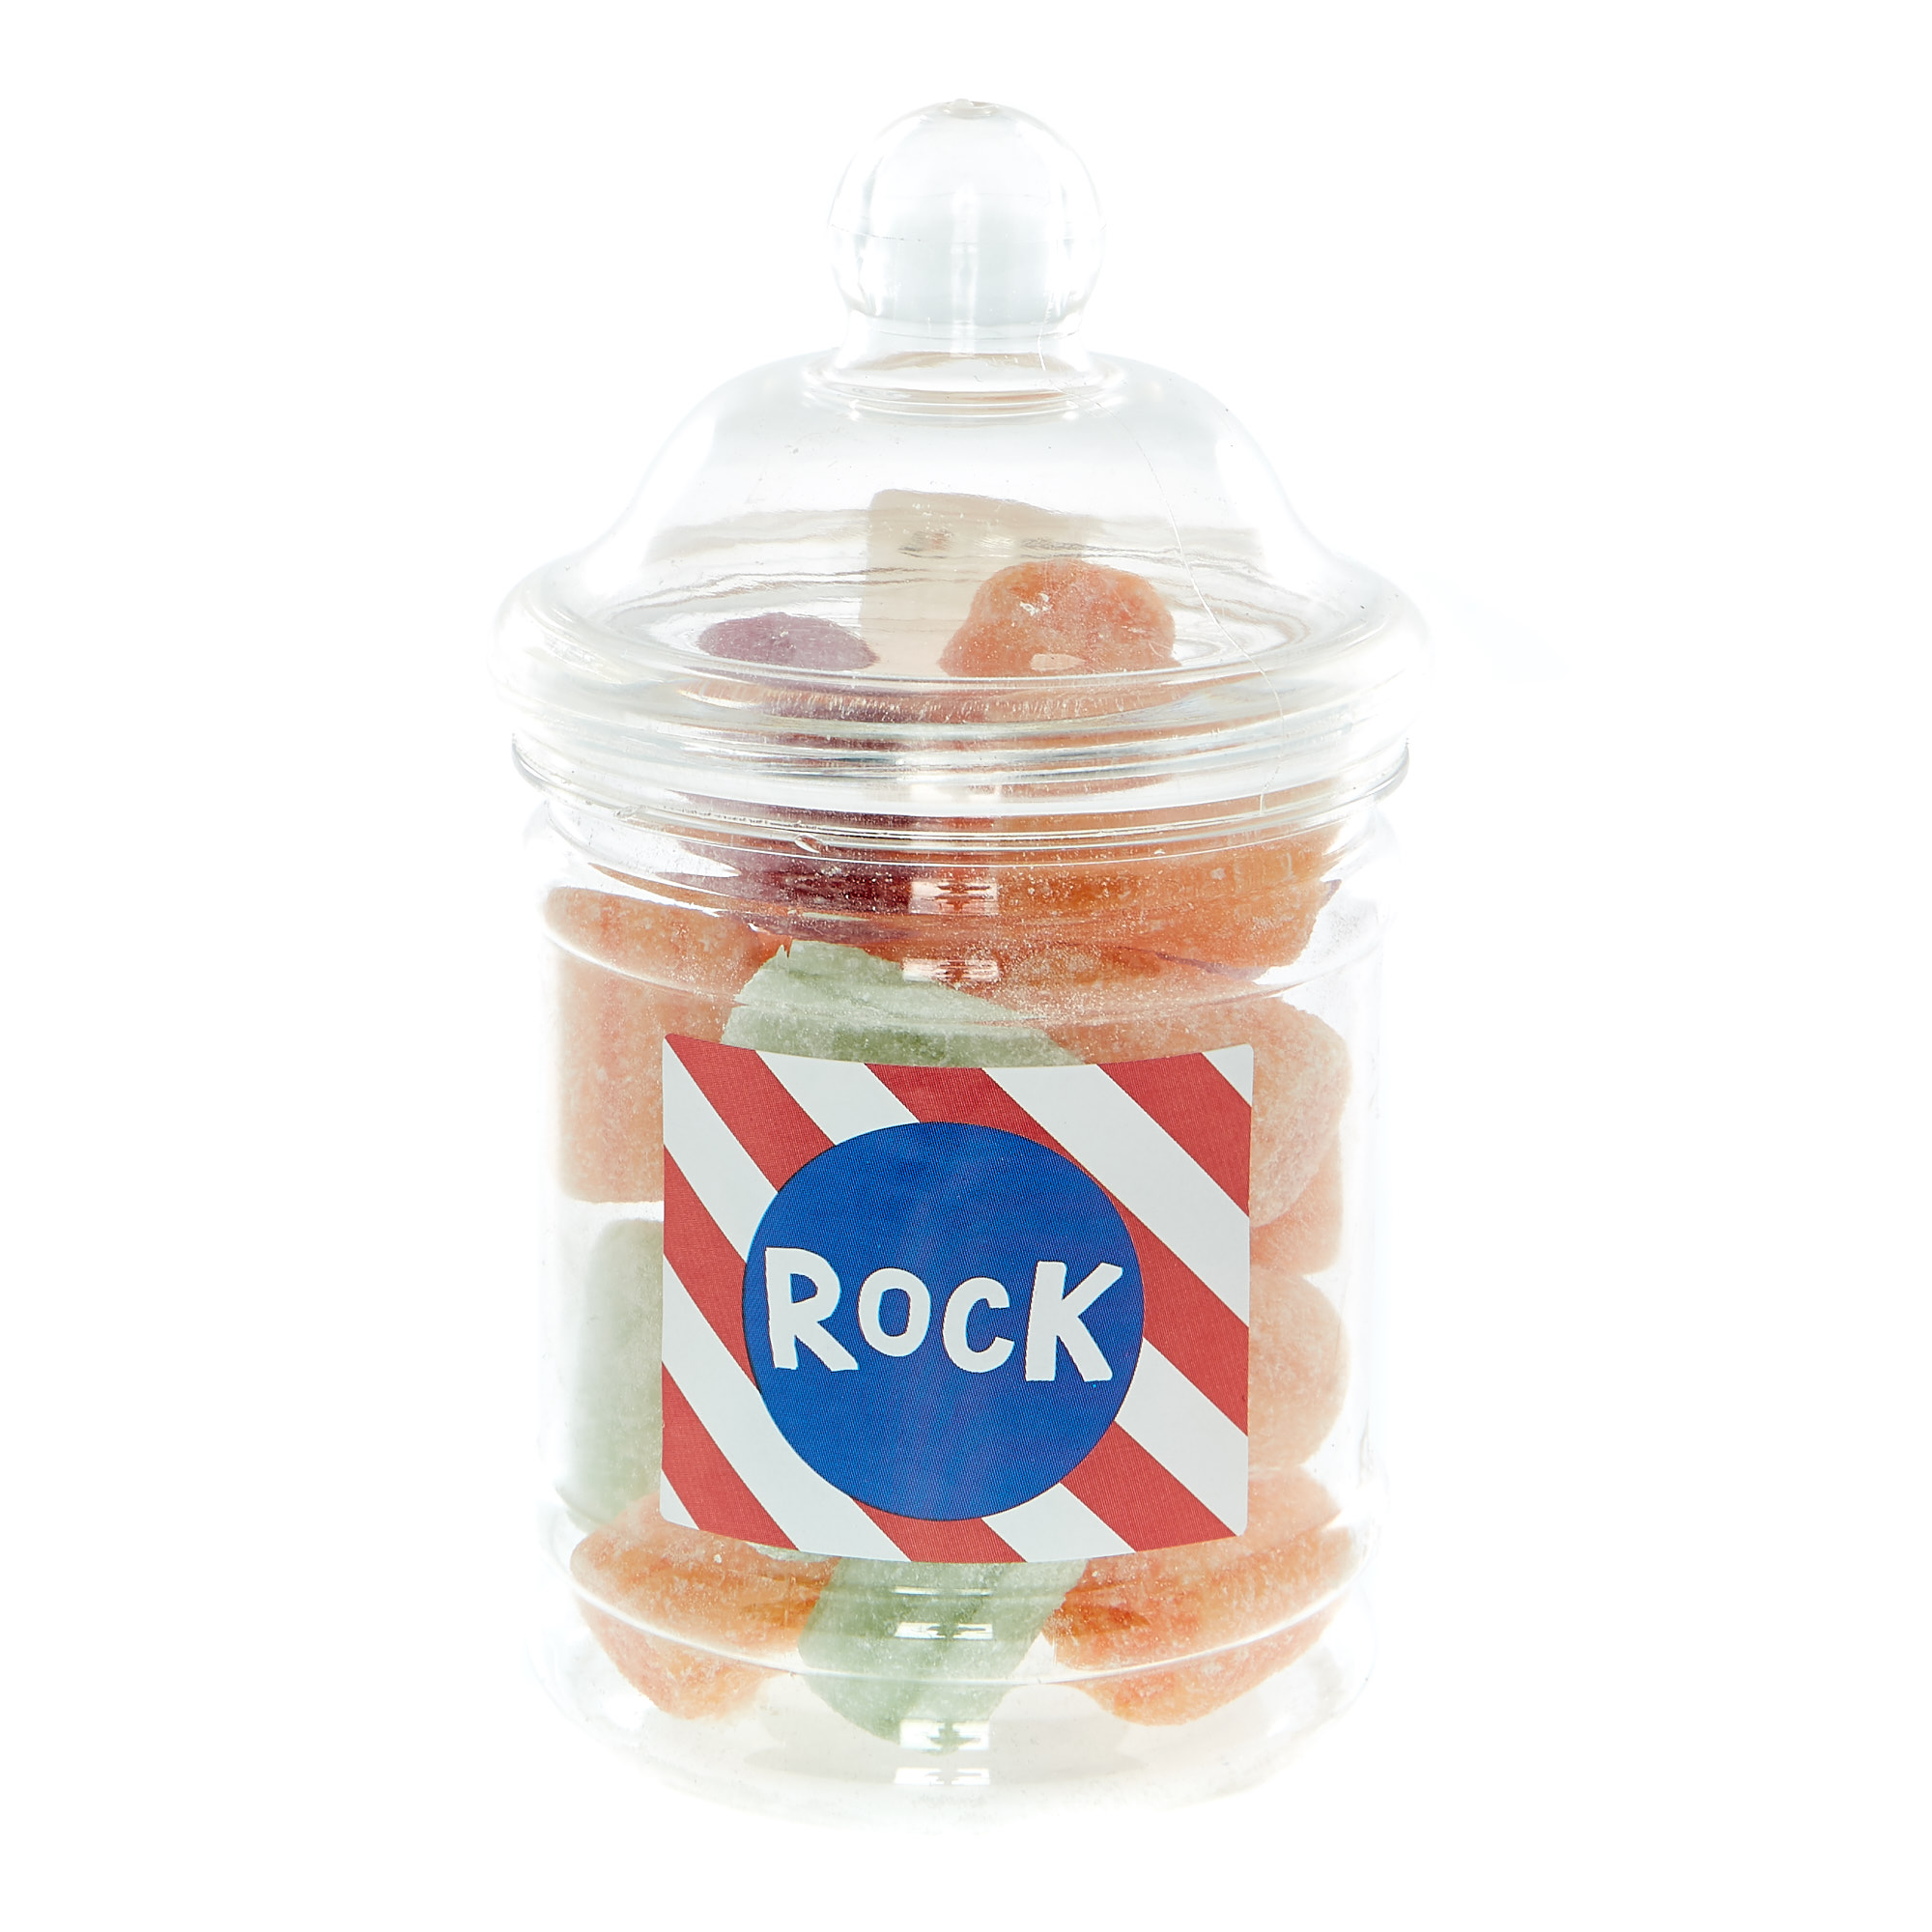 Mint Flavoured Rock Sweets In A Jar